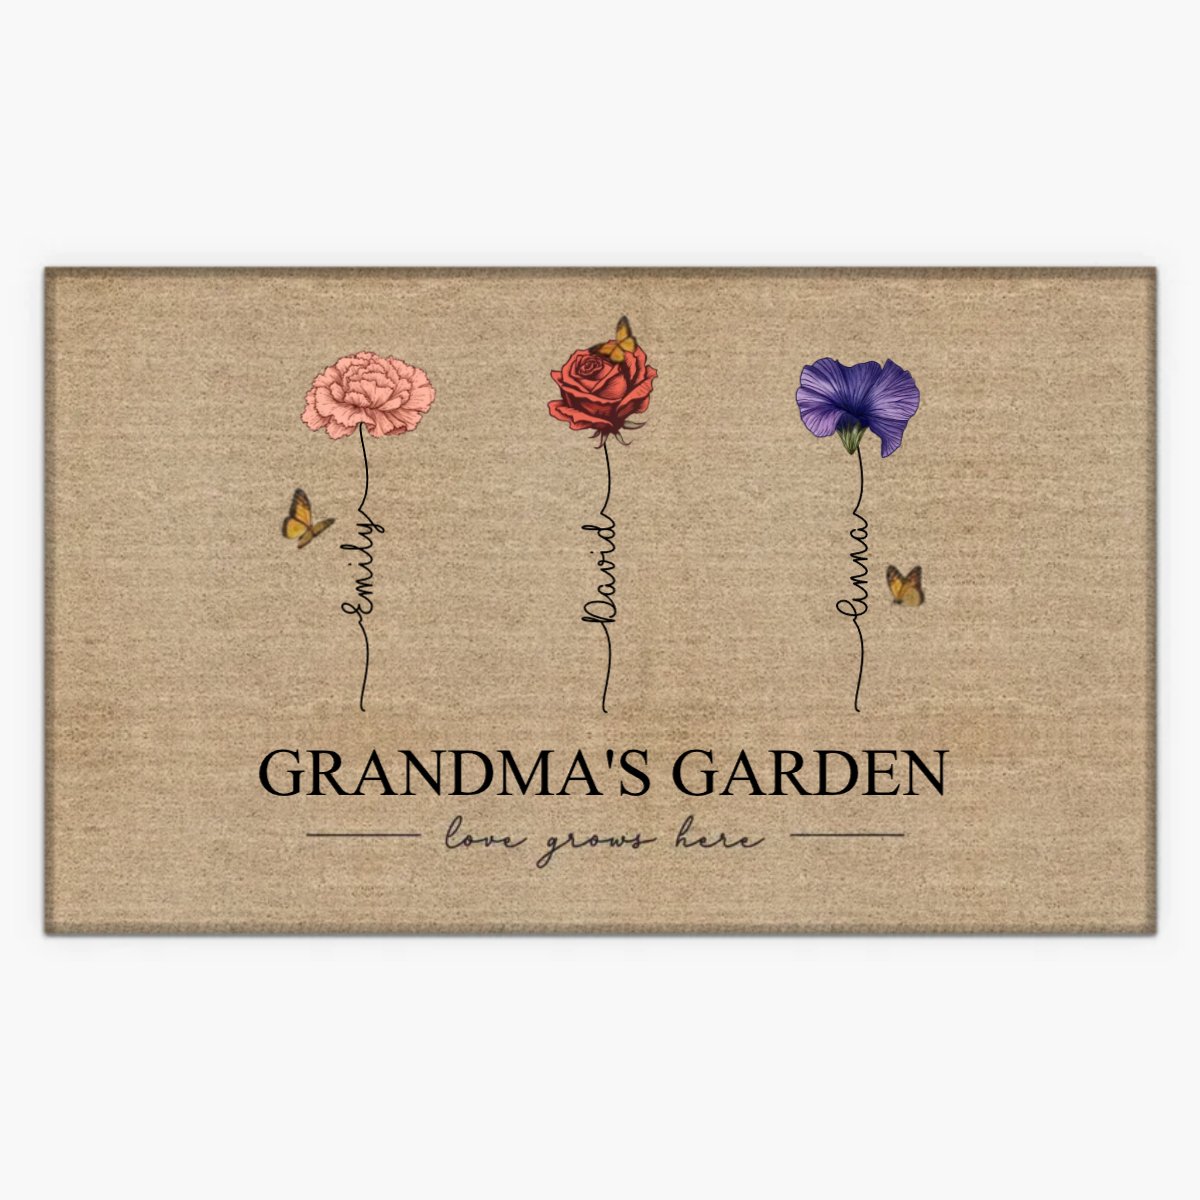 Family - Grandma's Garden Love Grows Here - Personalized Doormat - The Next Custom Gift